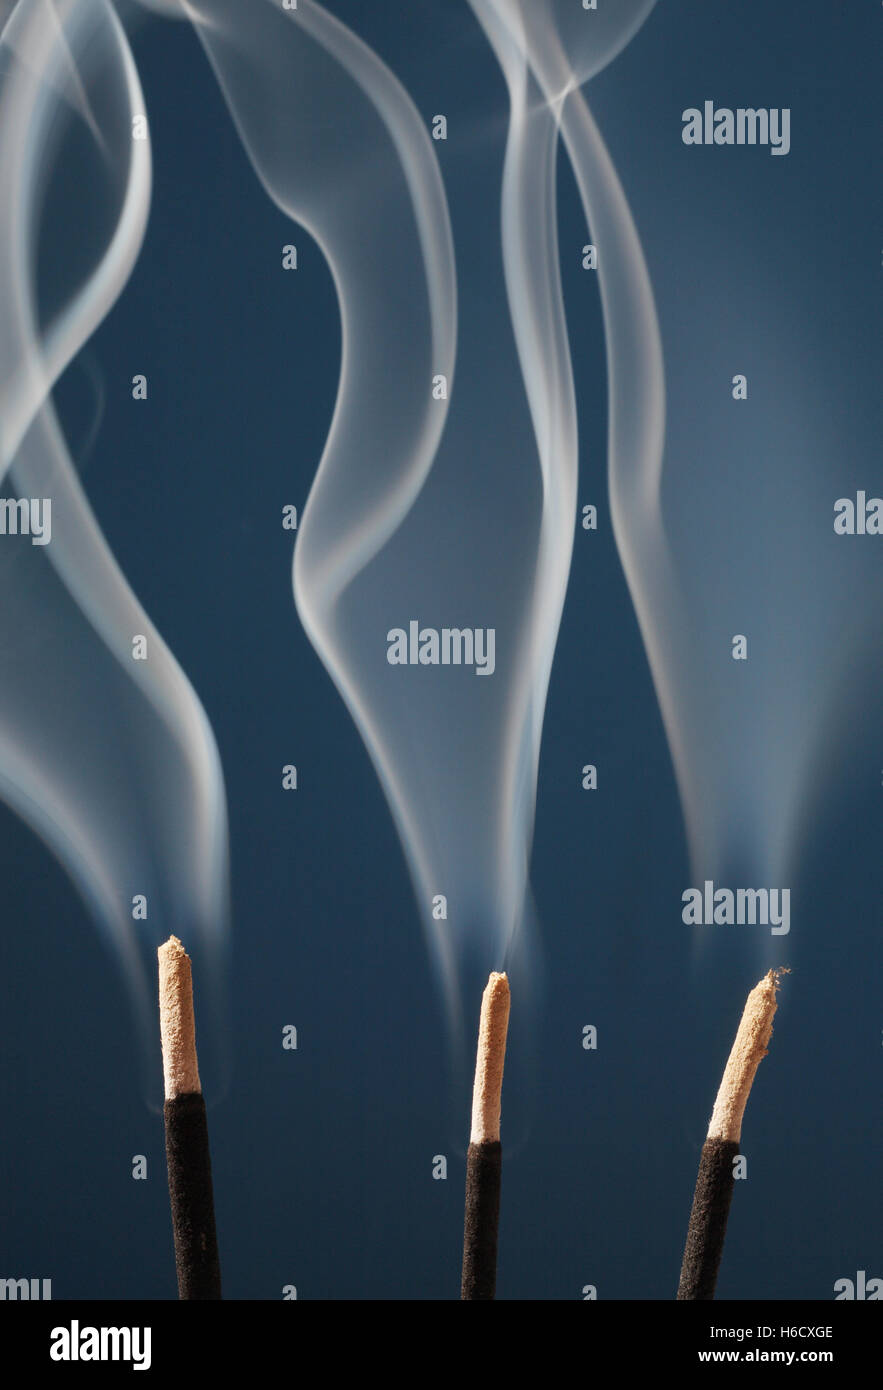 Smoke rising from three incense sticks Stock Photo